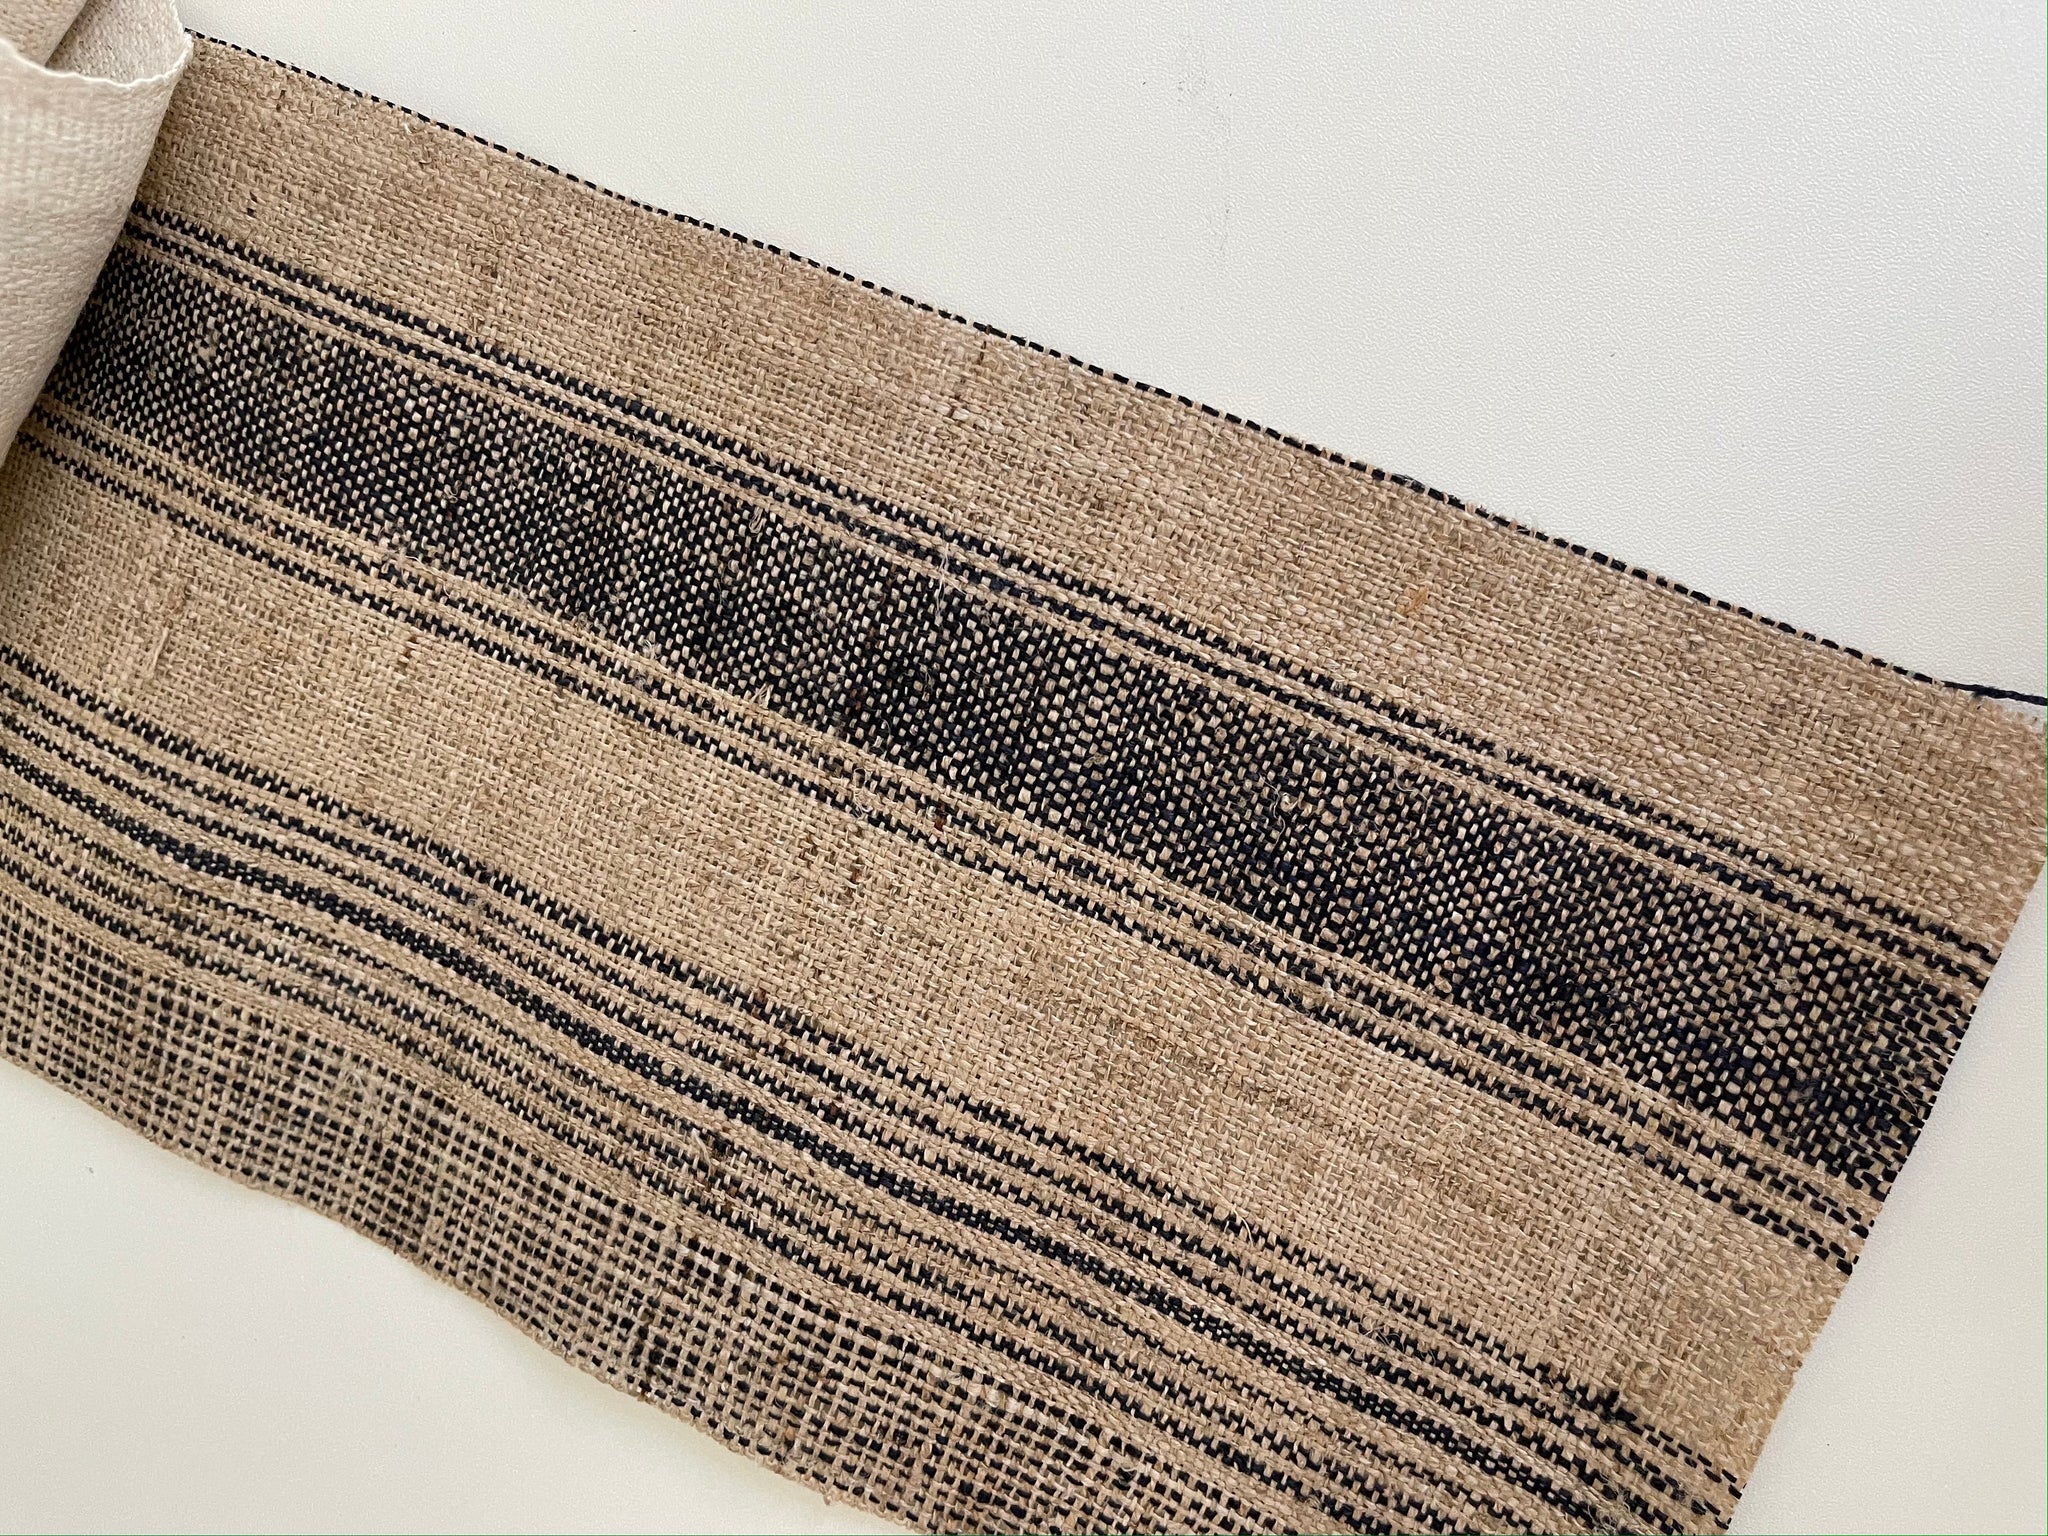 Organic Handwoven Hemp Fabric Bundle - Off-White and Natural Stripe